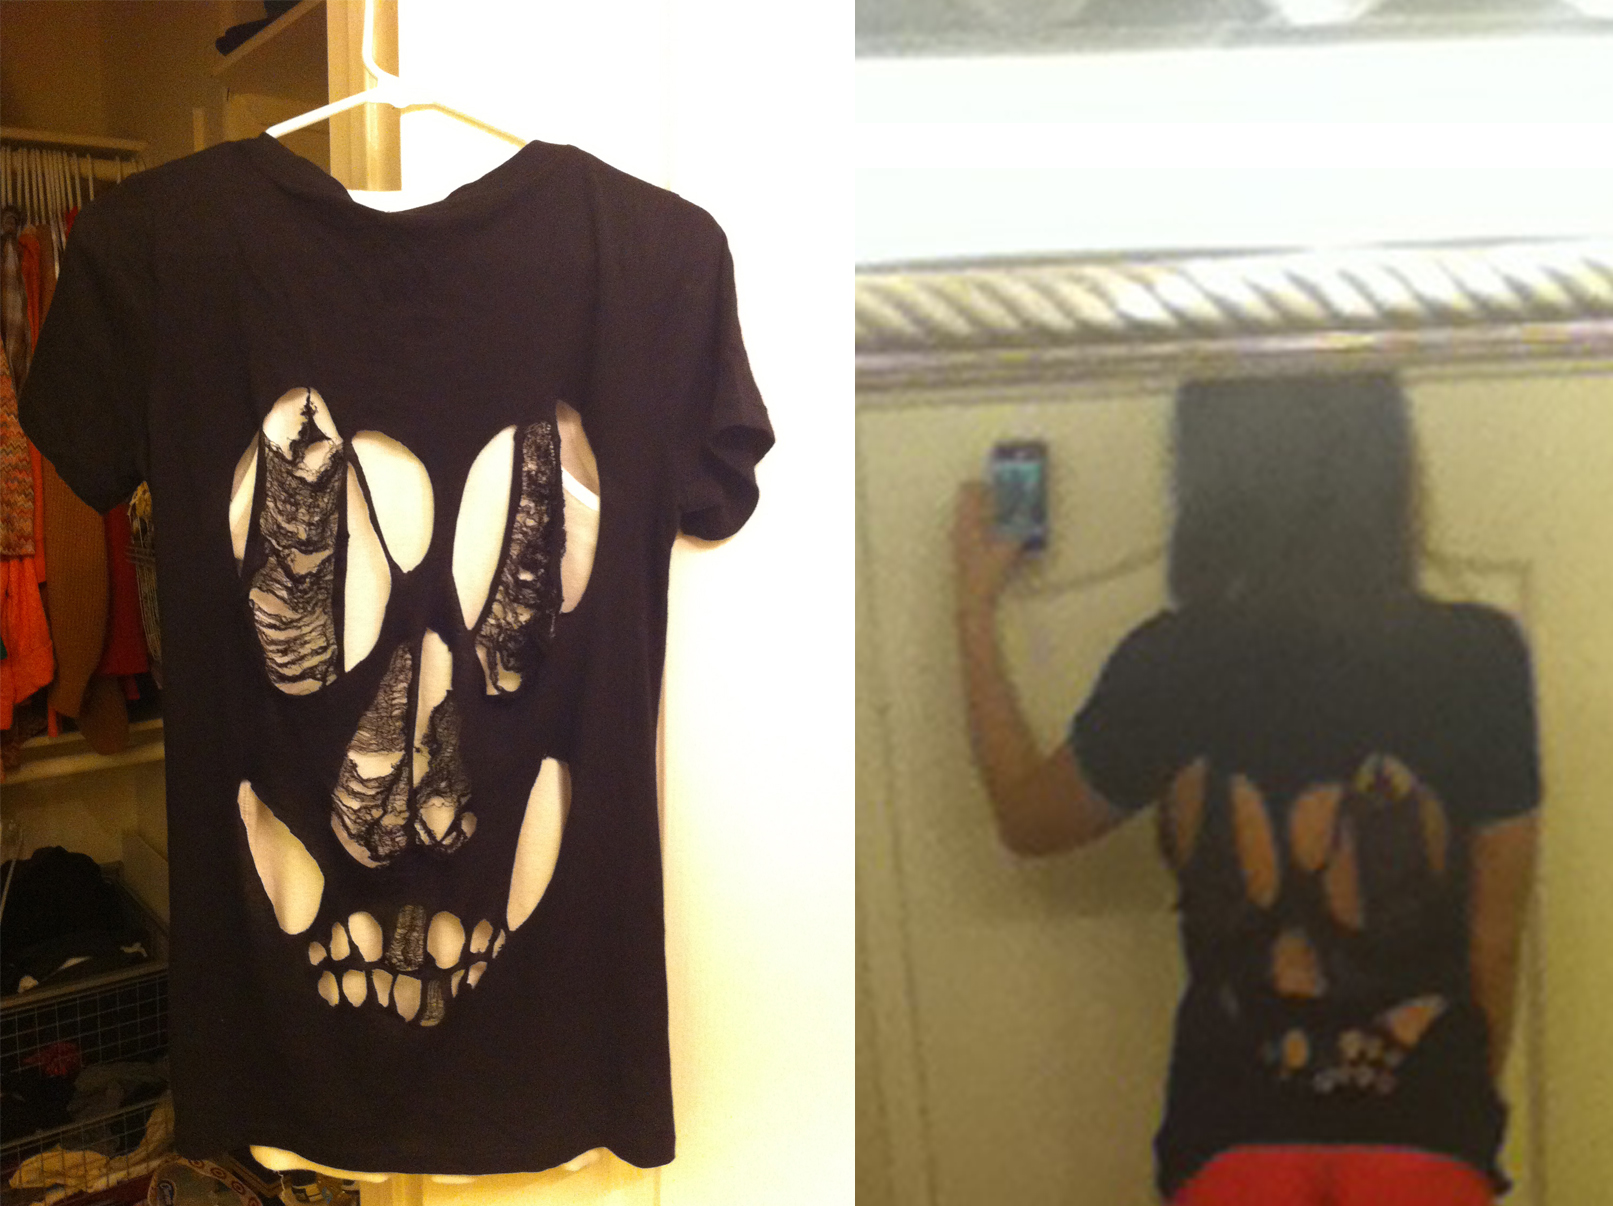 https://rabbitfoodformybunnyteeth.com/wp-content/uploads/2013/10/DIY-Cutout-Skull-Shirt.jpg